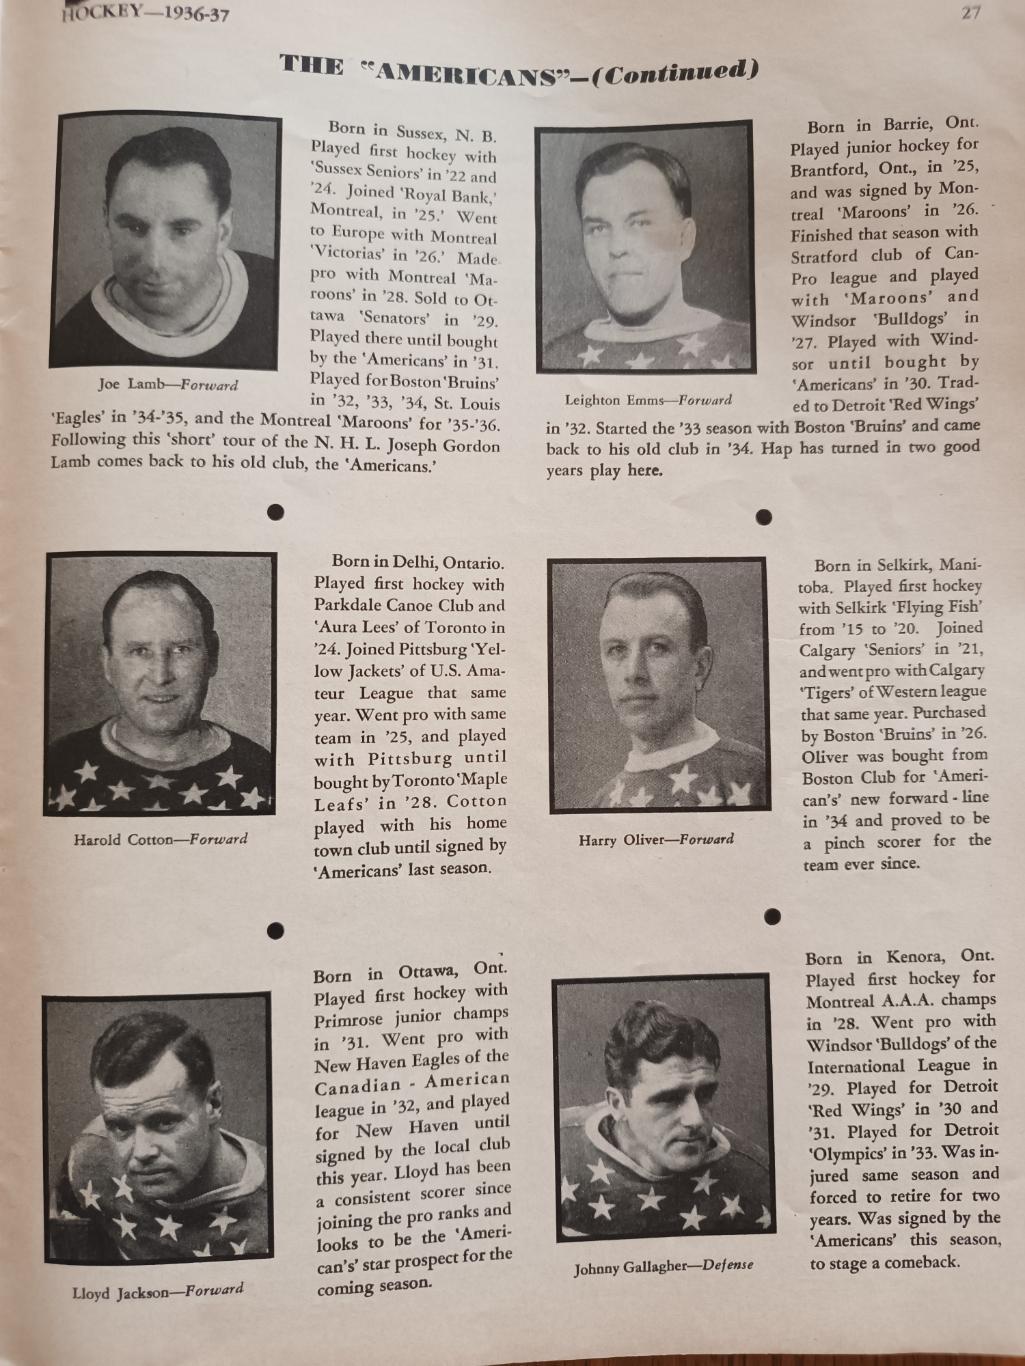 ПРОГРАММА МАТЧА НХЛ РЭЙНДЖЕРС ТОРОНТО 1936 NOV.24 RANGERS VS. TORONTO PROGRAM 6